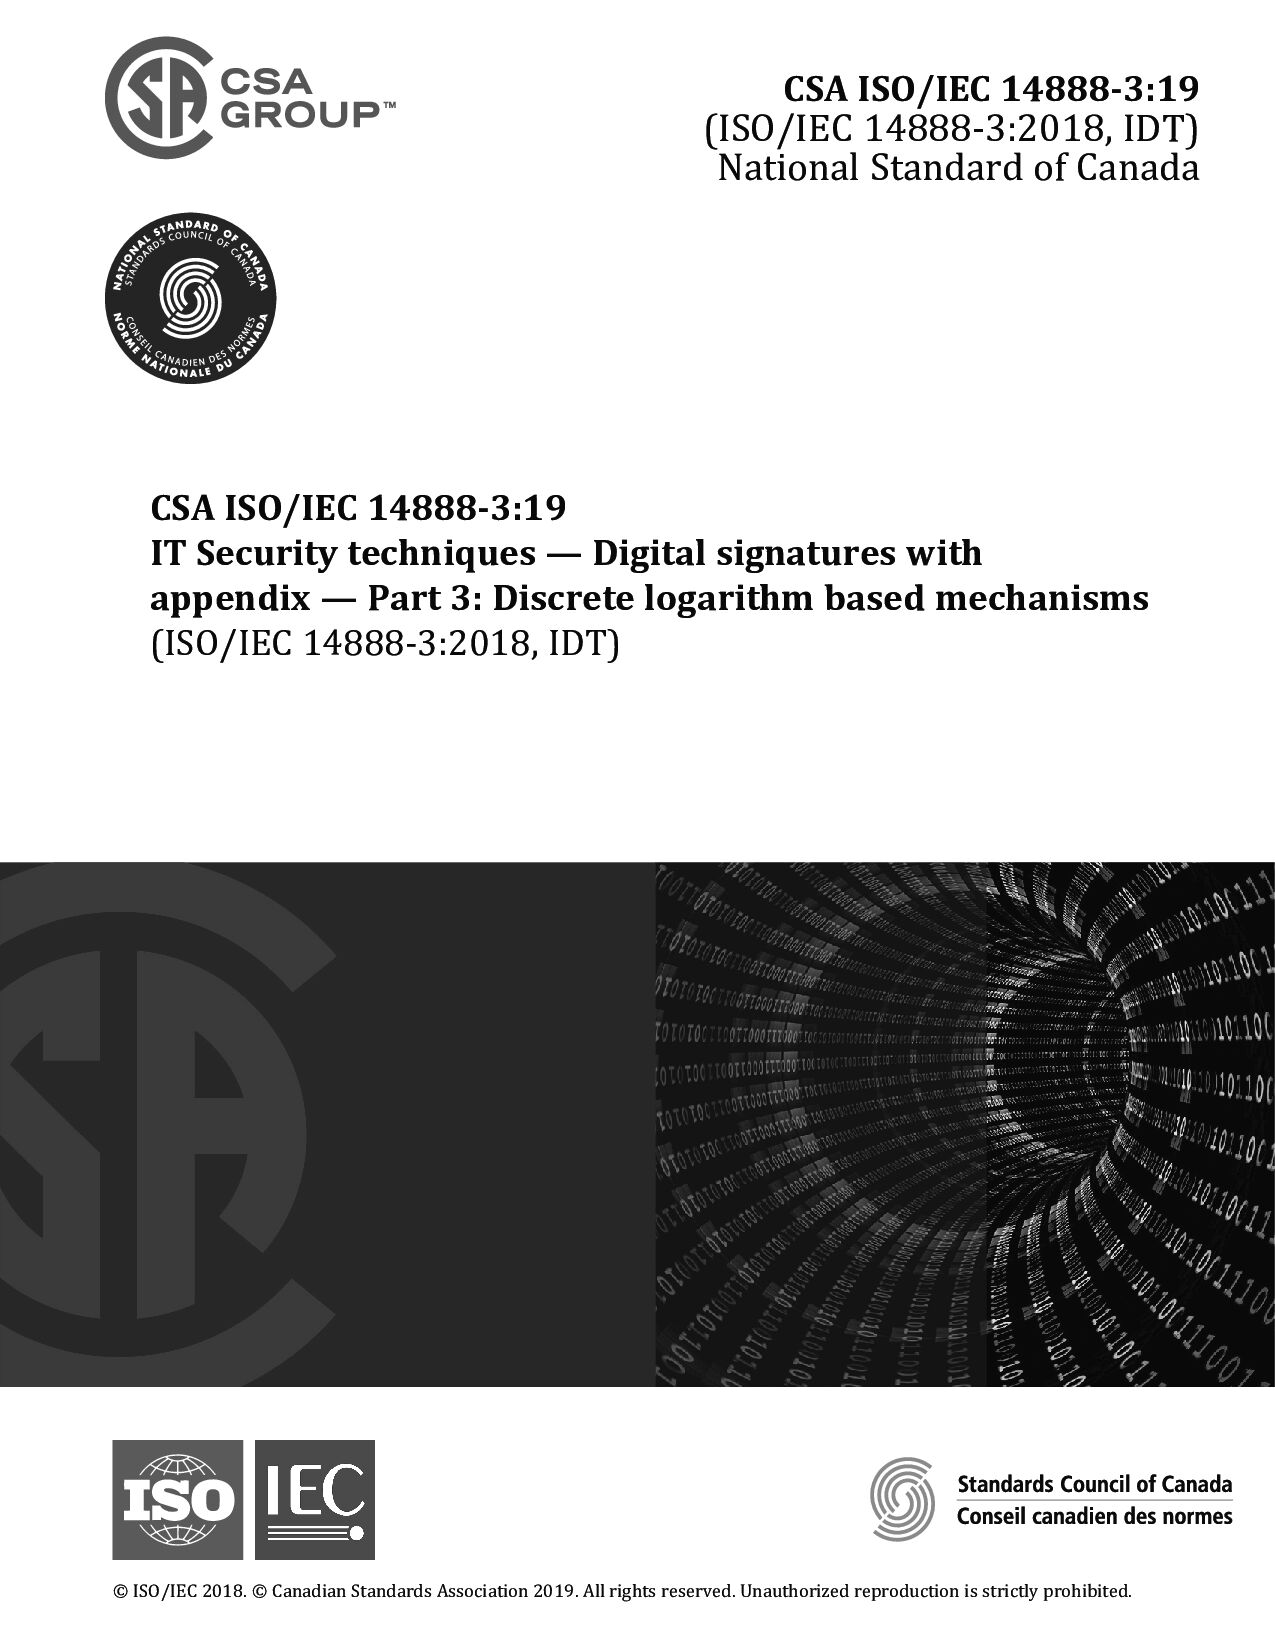 CSA ISO/IEC 14888-3:2019